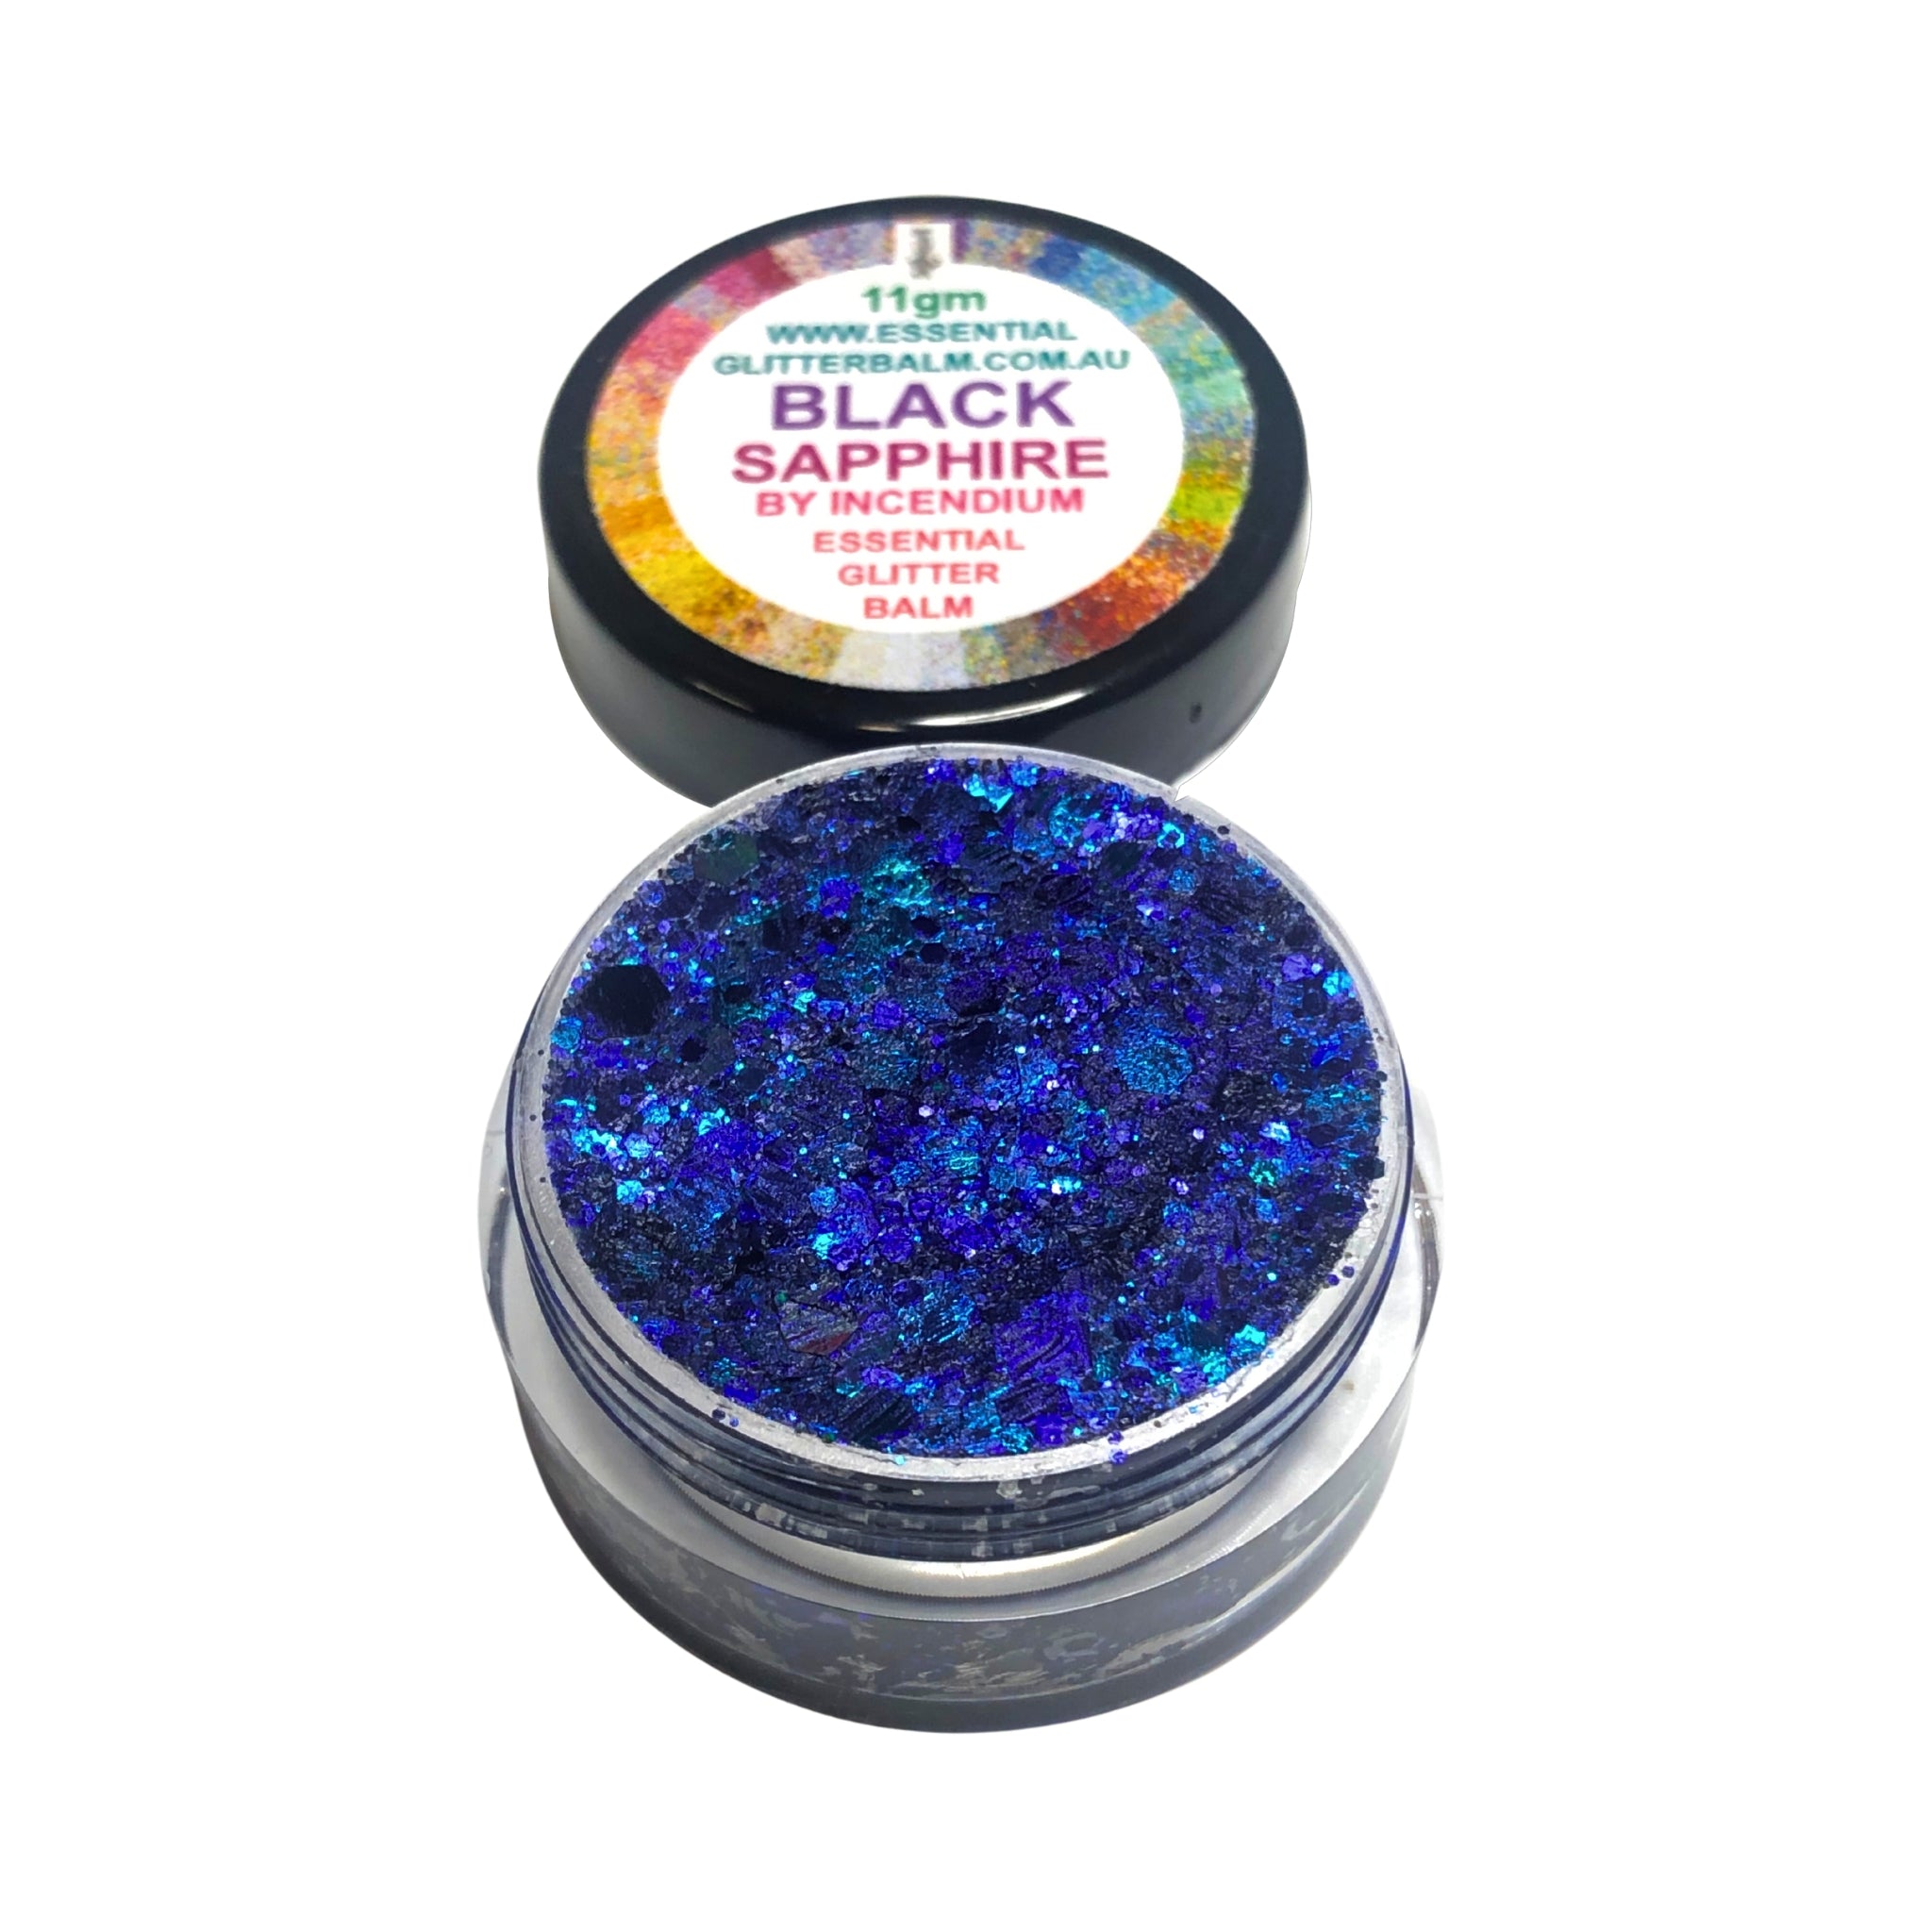 Essential Glitter Balm - BLACK SAPPHIRE